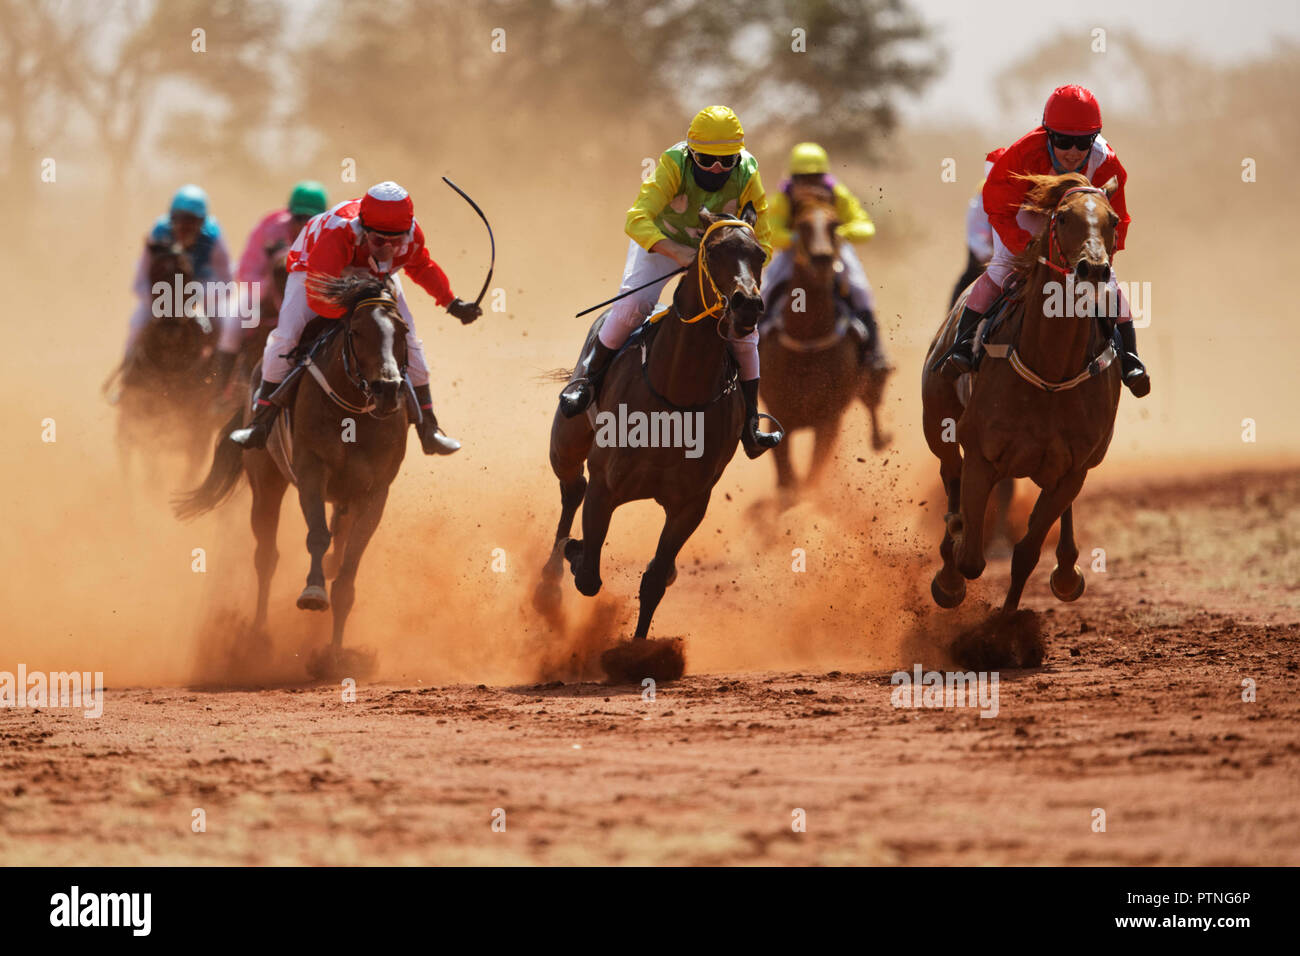 The 97th running of the annual bush races at Landor,,1000km north of Perth, Australia. Stock Photo